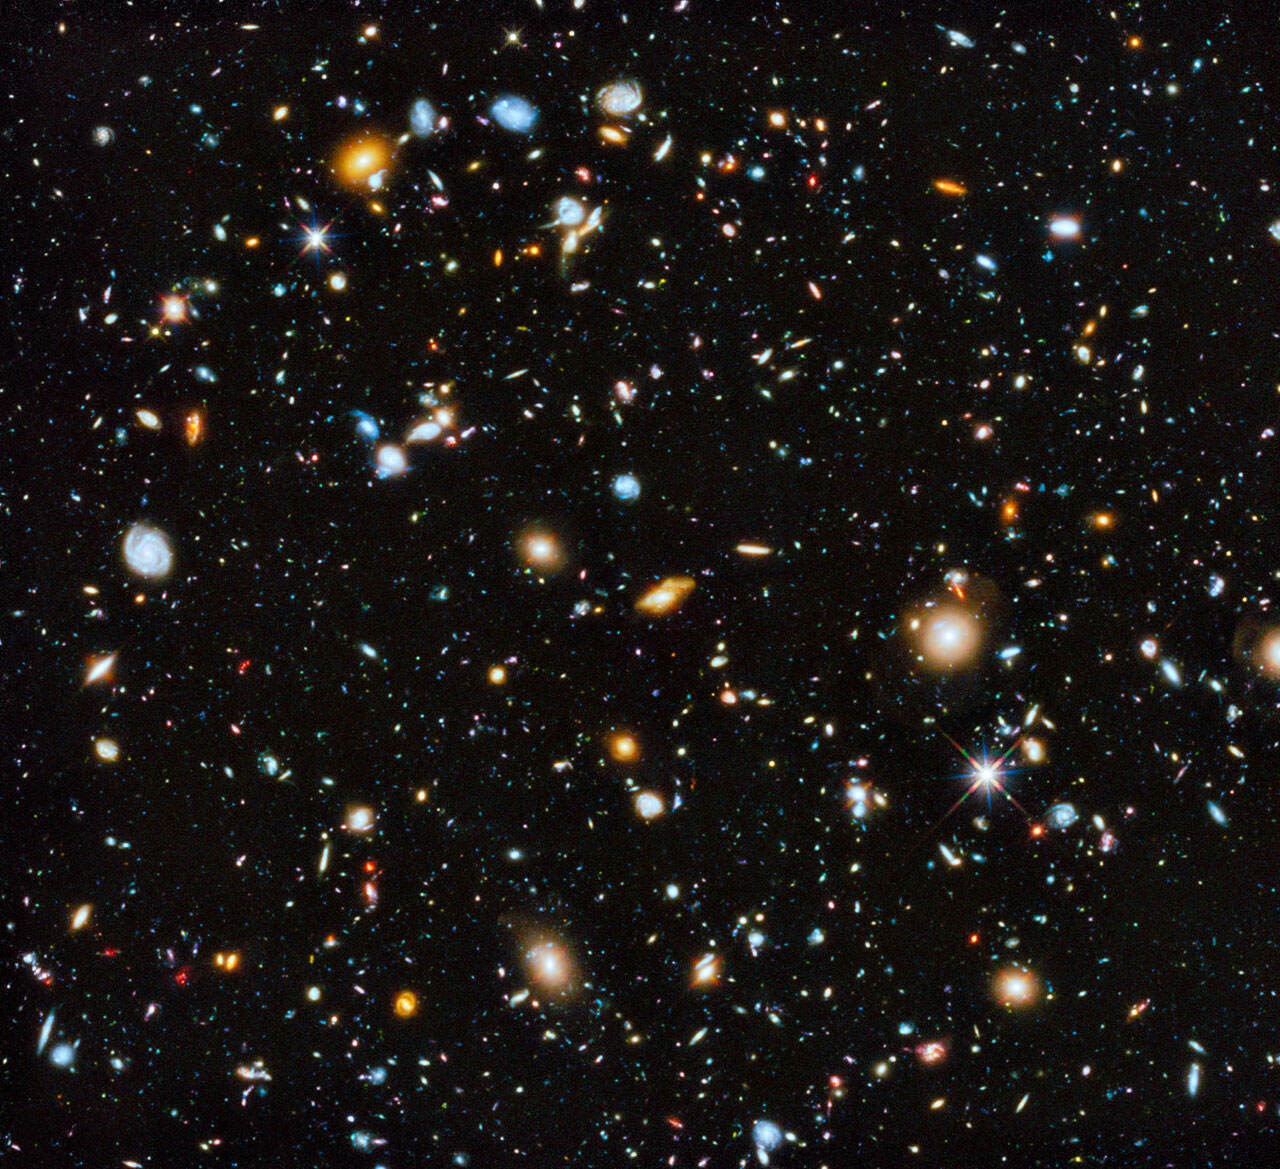 HUBBLE ULTRA DEEP FIELD HUBBLE SPACE TELESCOPE 8X10 GLOSSY PHOTO IMAGE #1